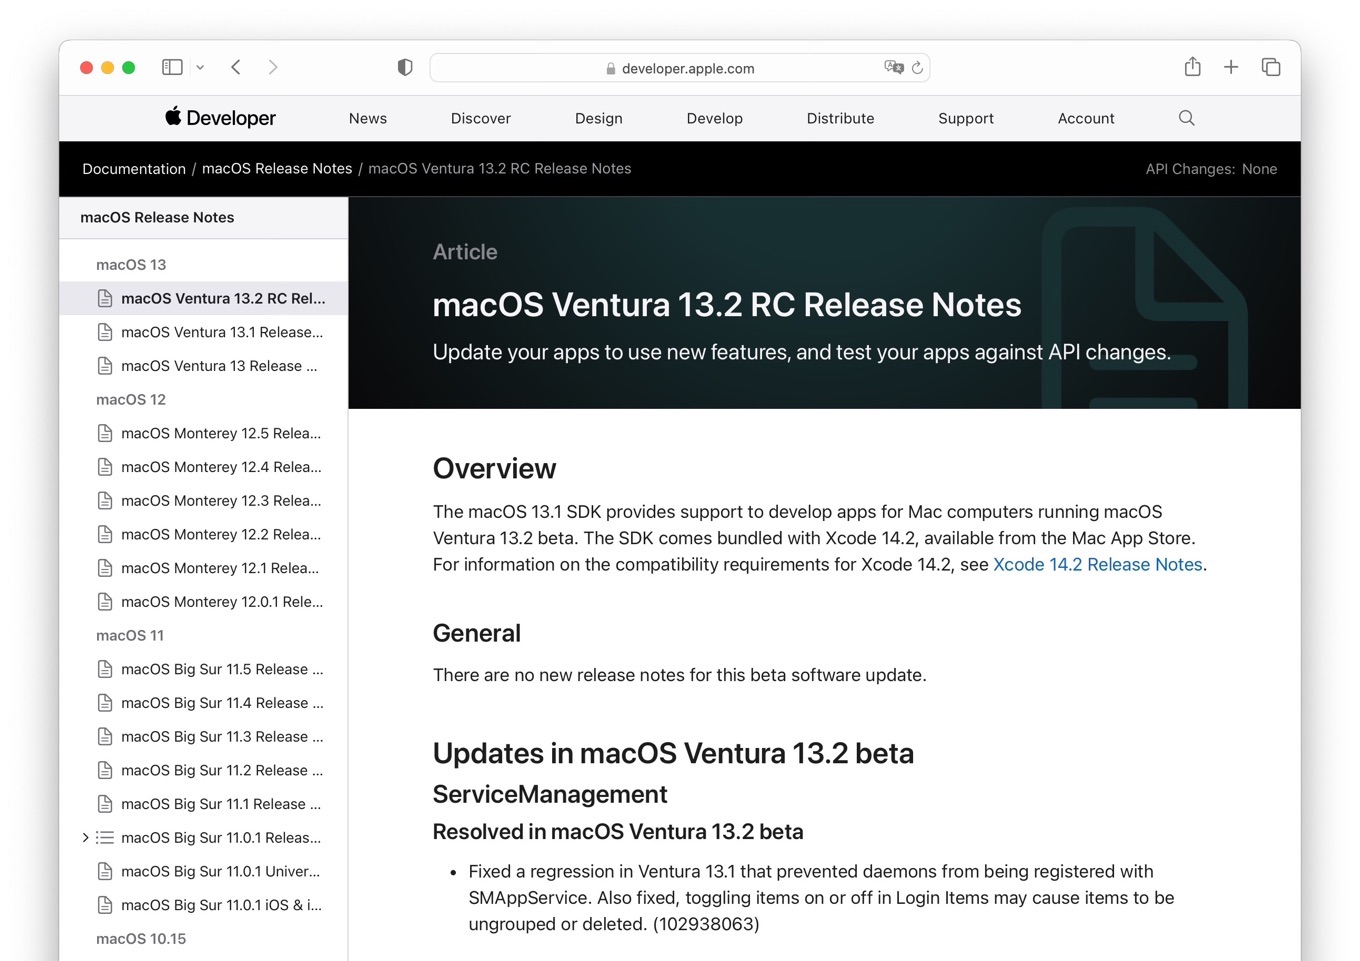 macOS Ventura 13.2 RC Release Notes